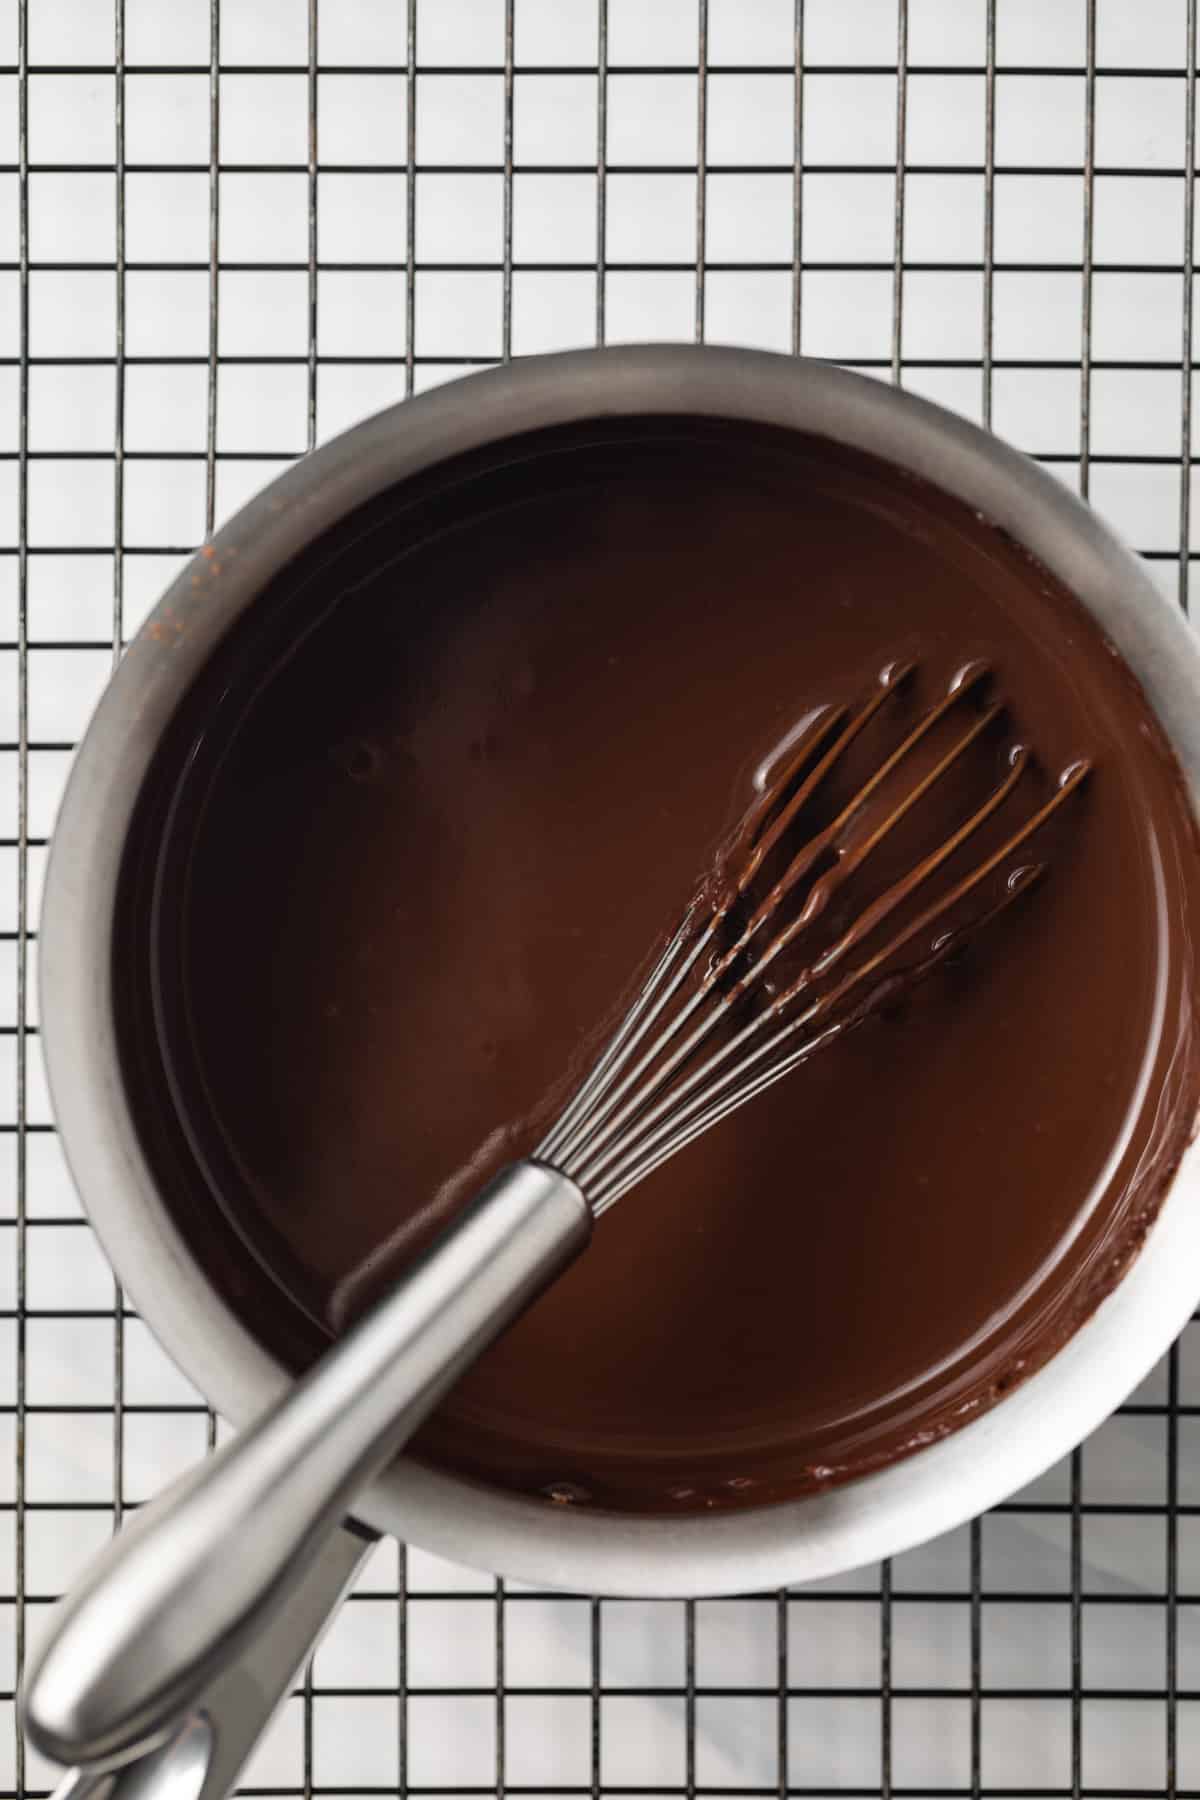 Chocolate sauce in saucepan.